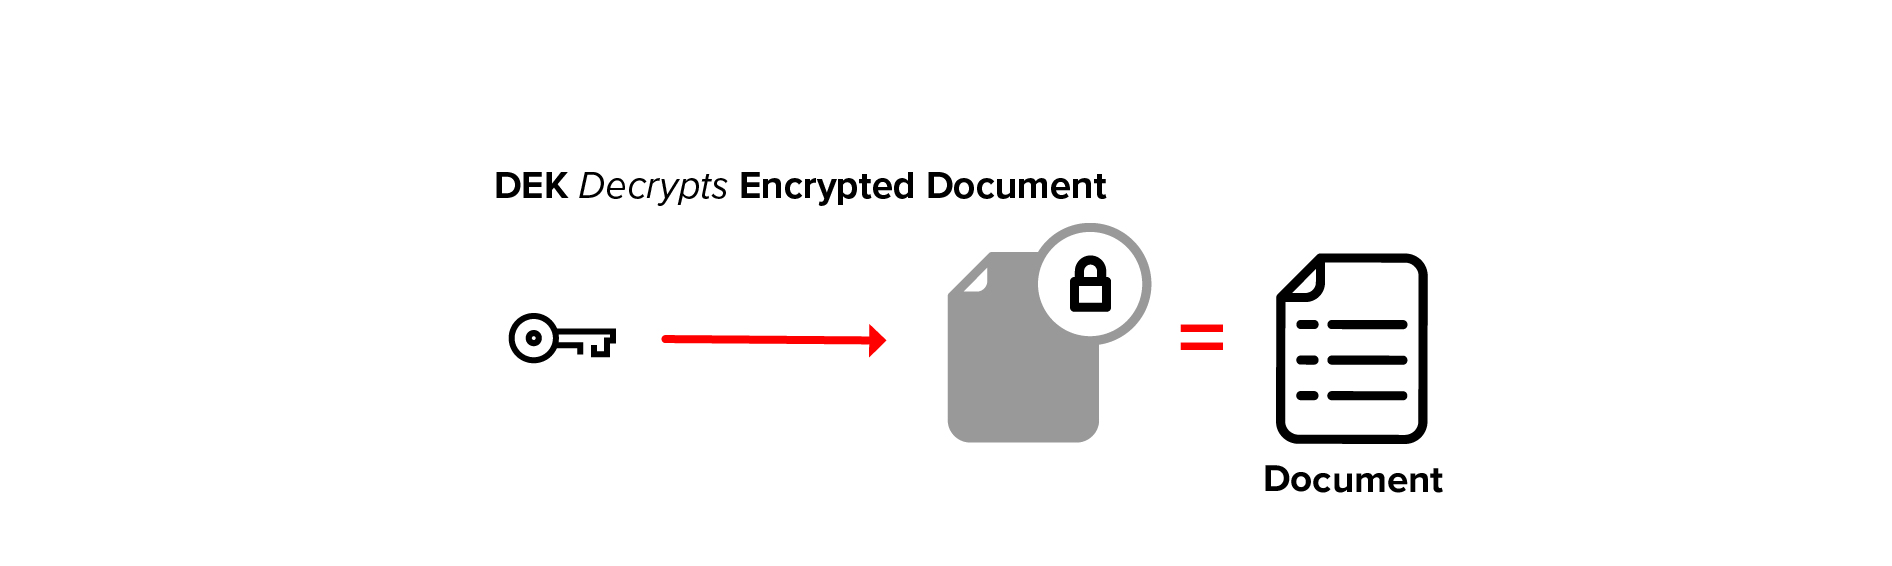 DEK decrypts encrypted document